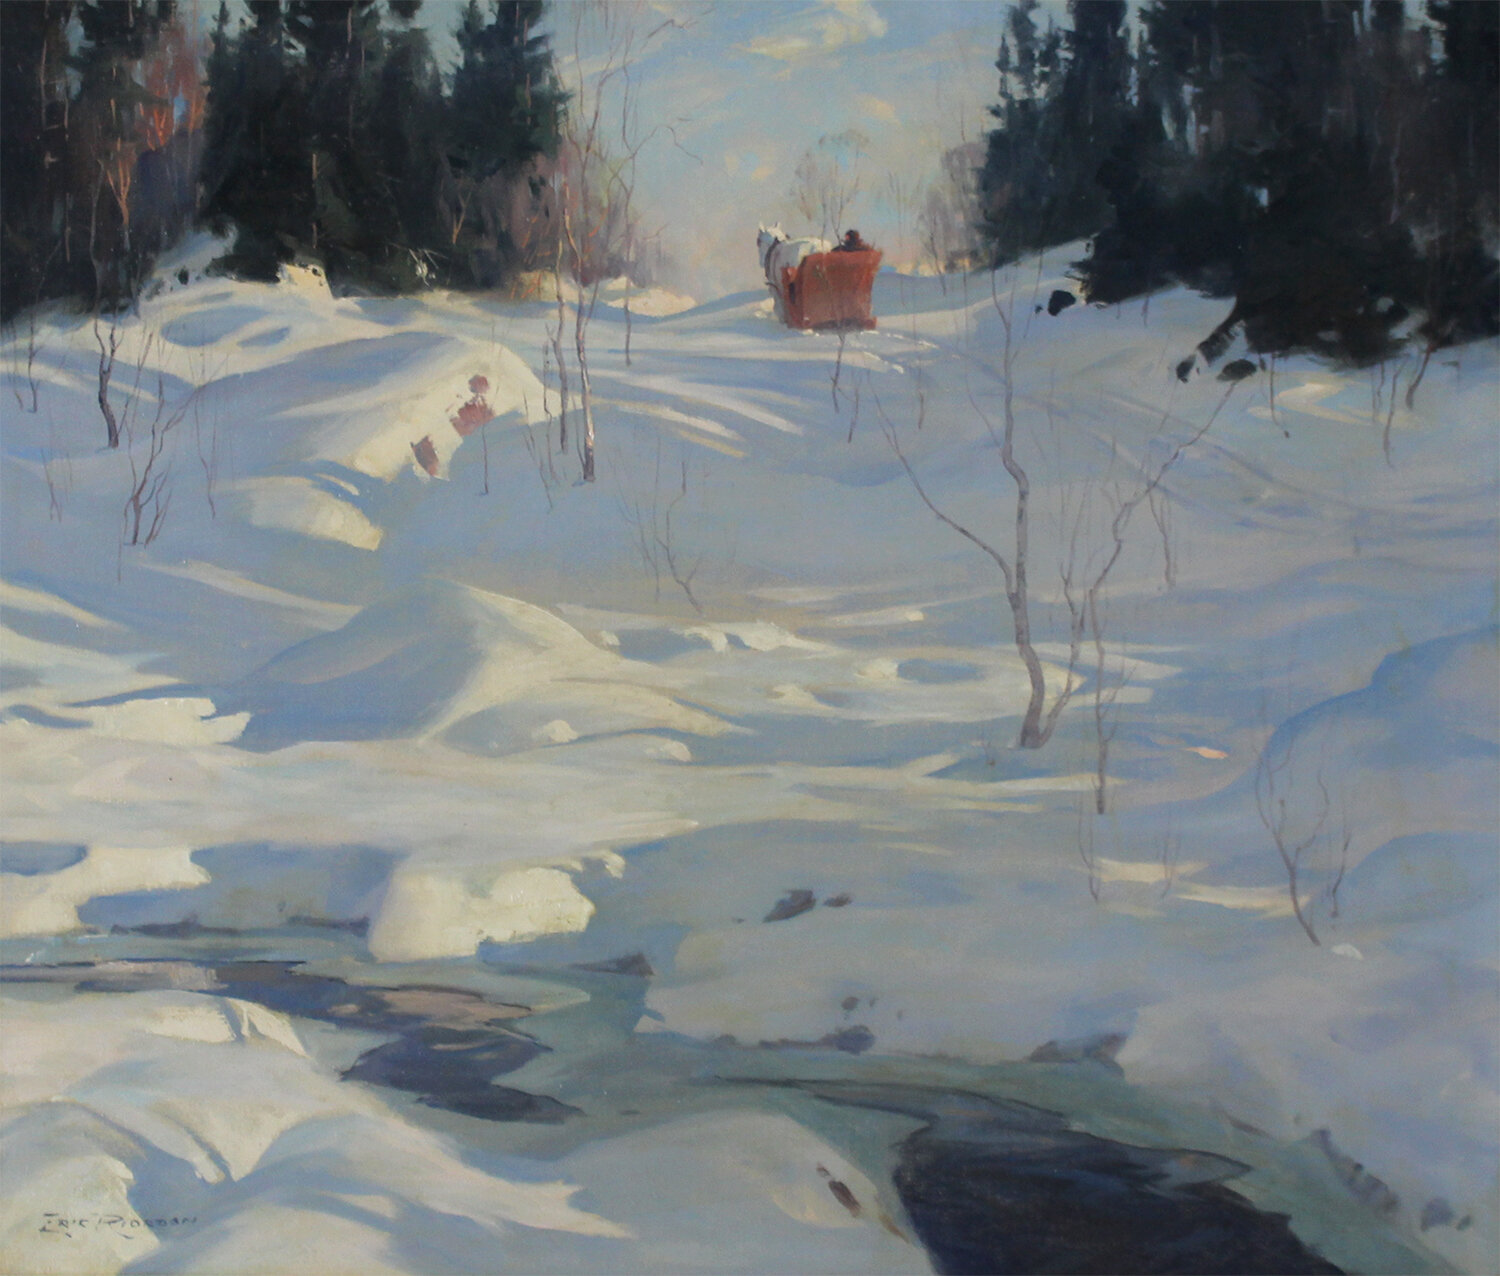 Eric Riordon (Canadian 1906-1948) 'Horse Drawn Sleigh on a Winter Trail'